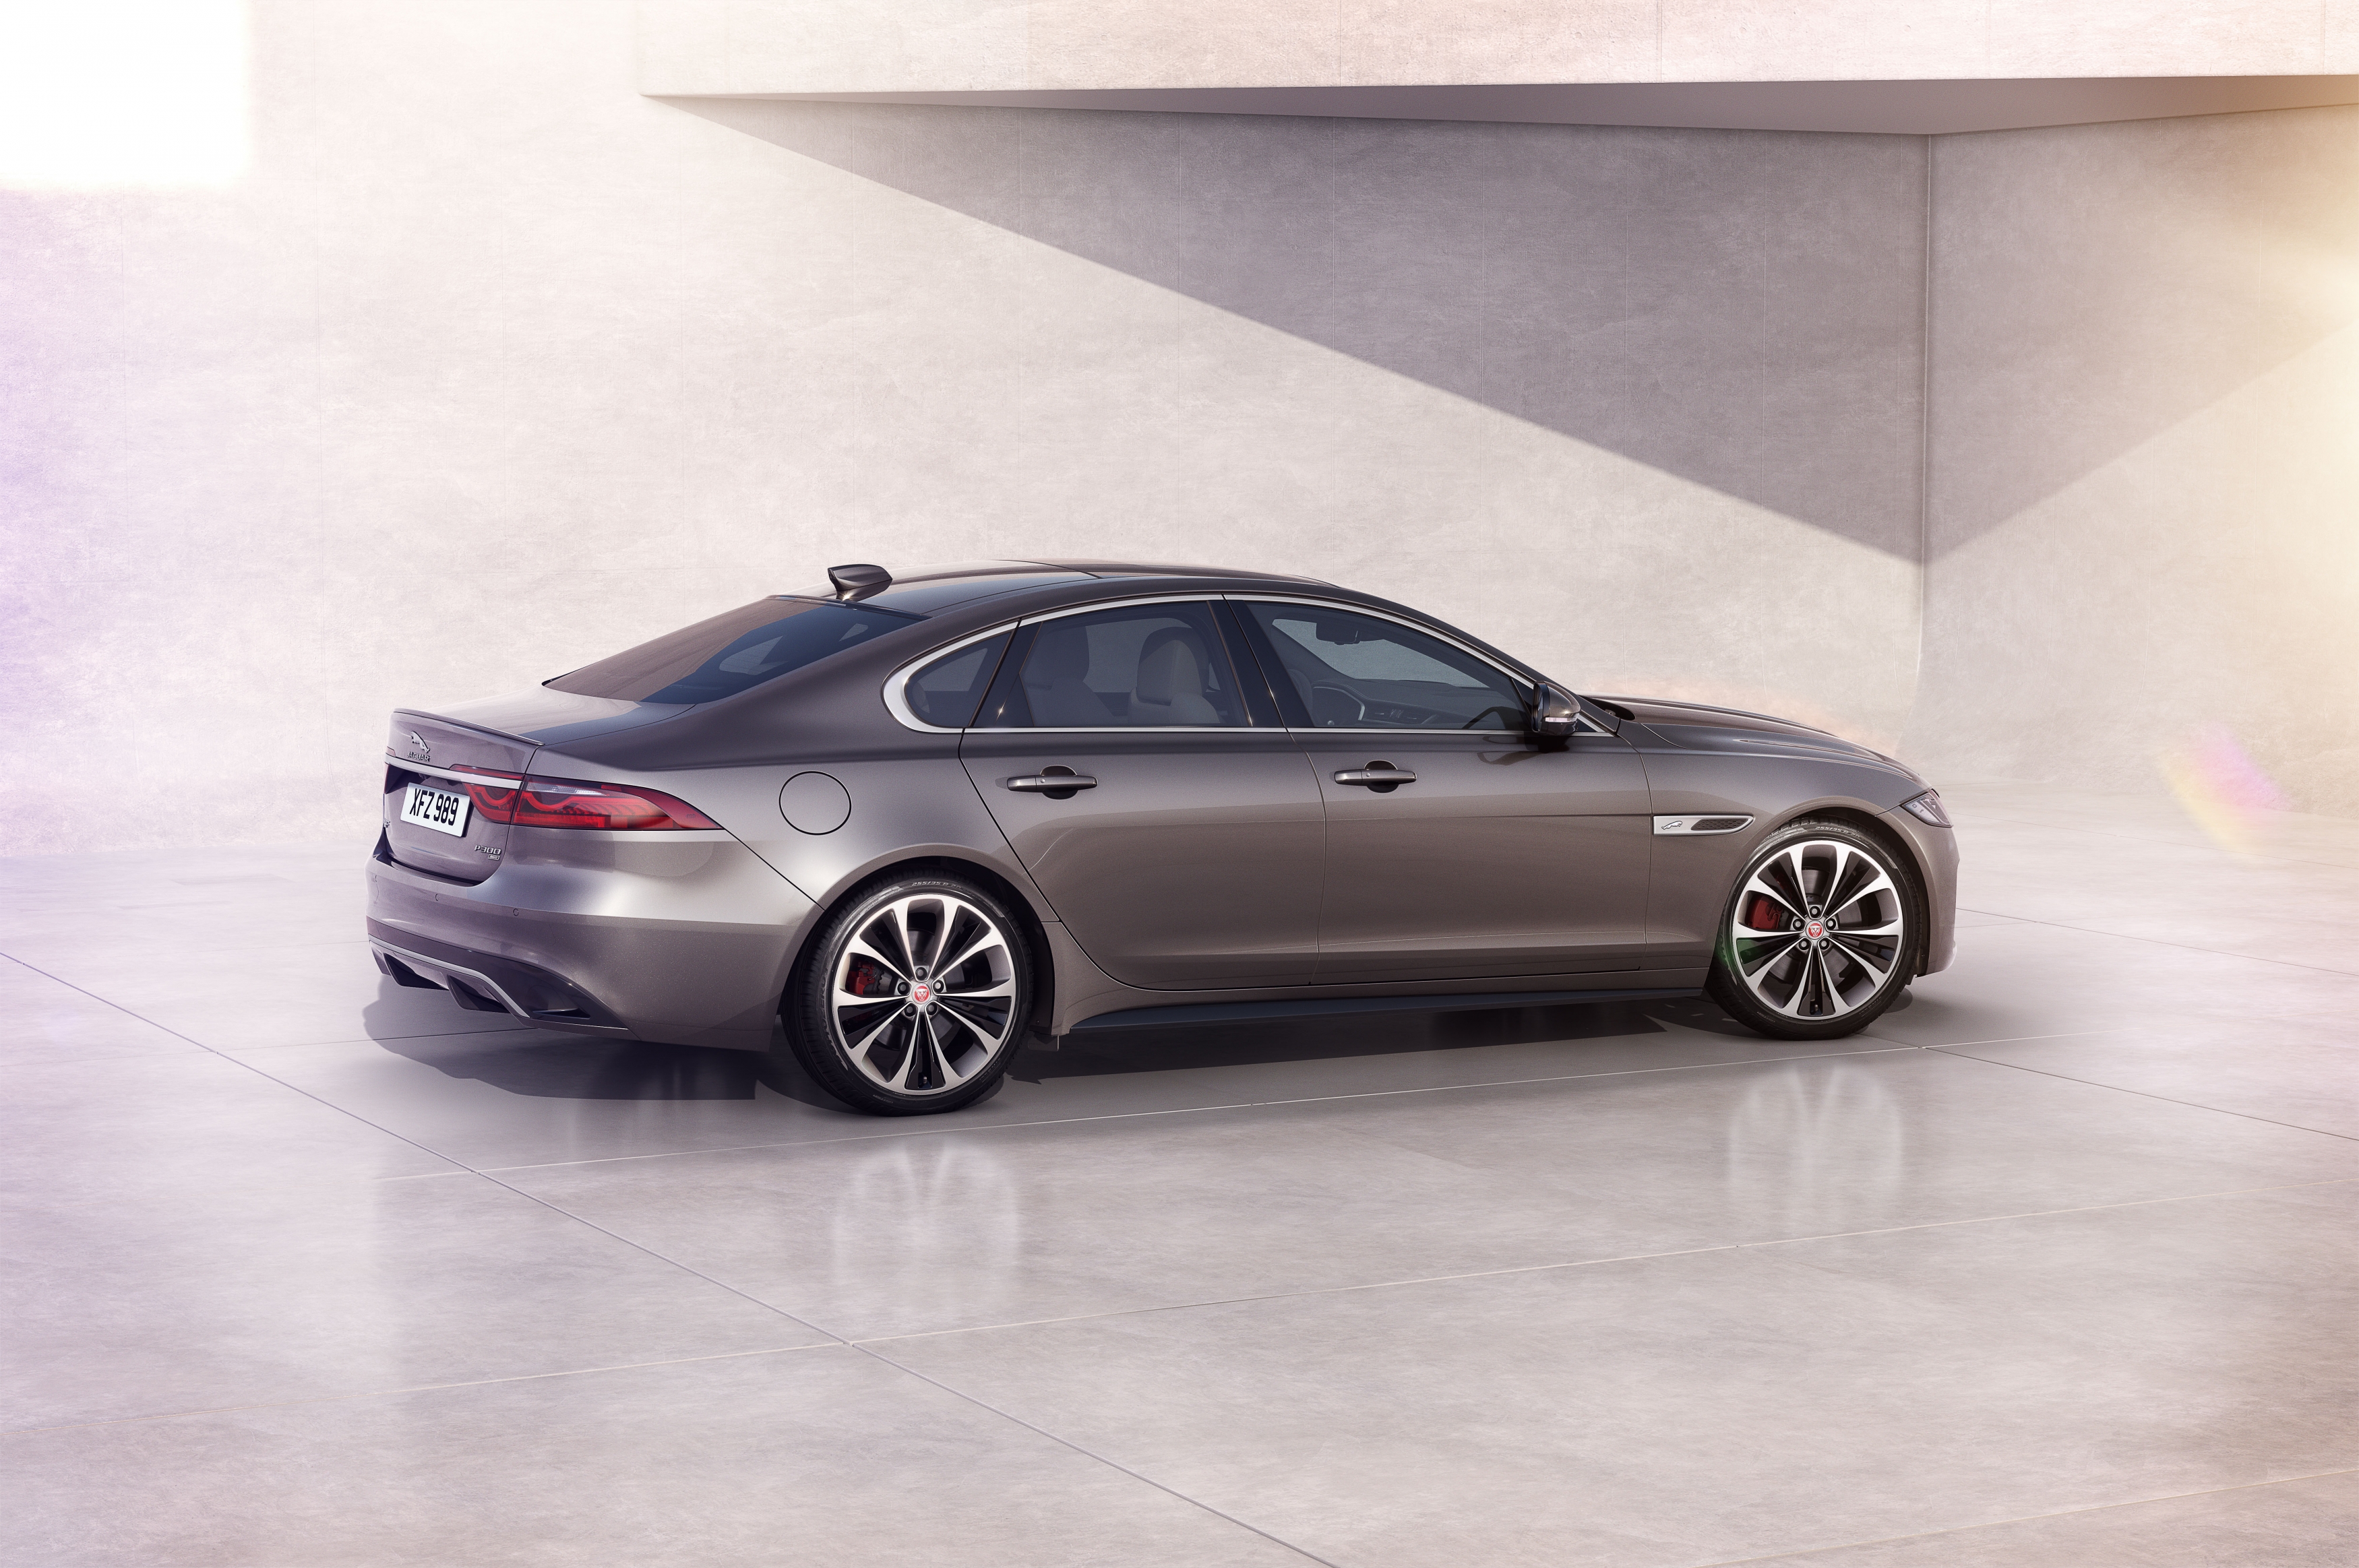 2021 Jaguar XF Sedan: Refined Luxury with Advanced Technology